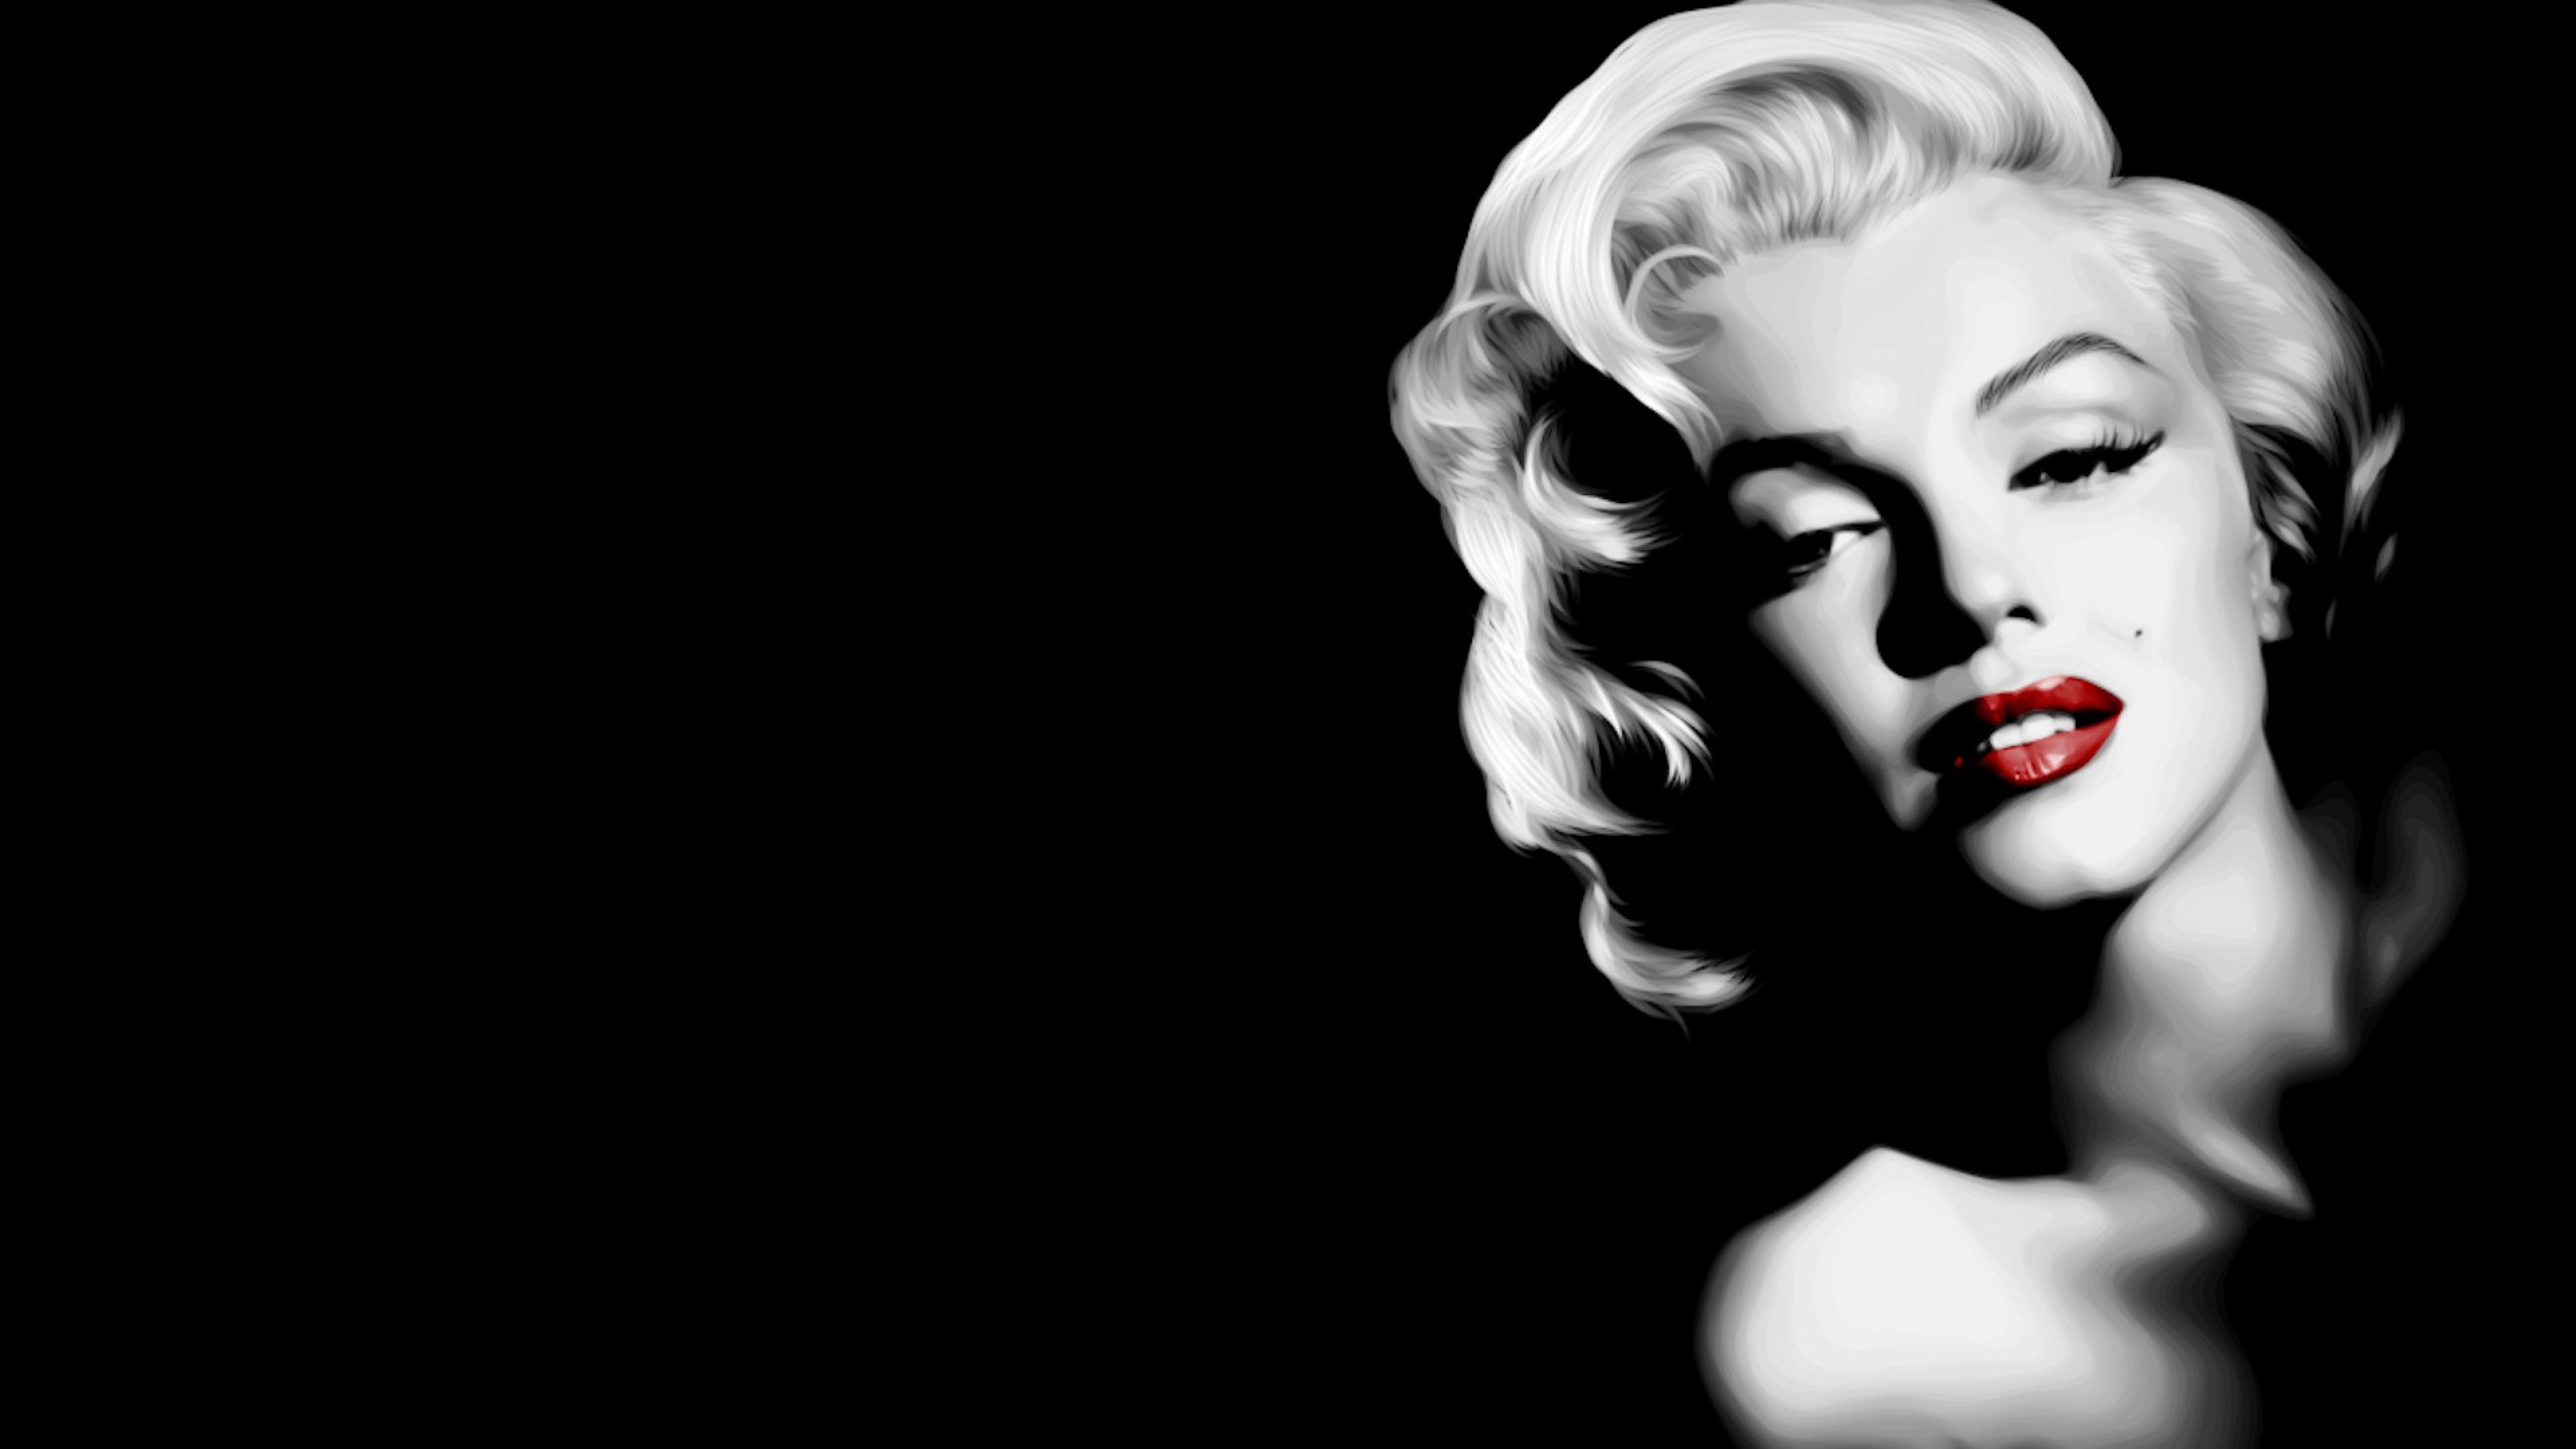 3840x2160 Resolution Marilyn Monroe Topless Images 4k Wallpaper Wallpapers Den 6259